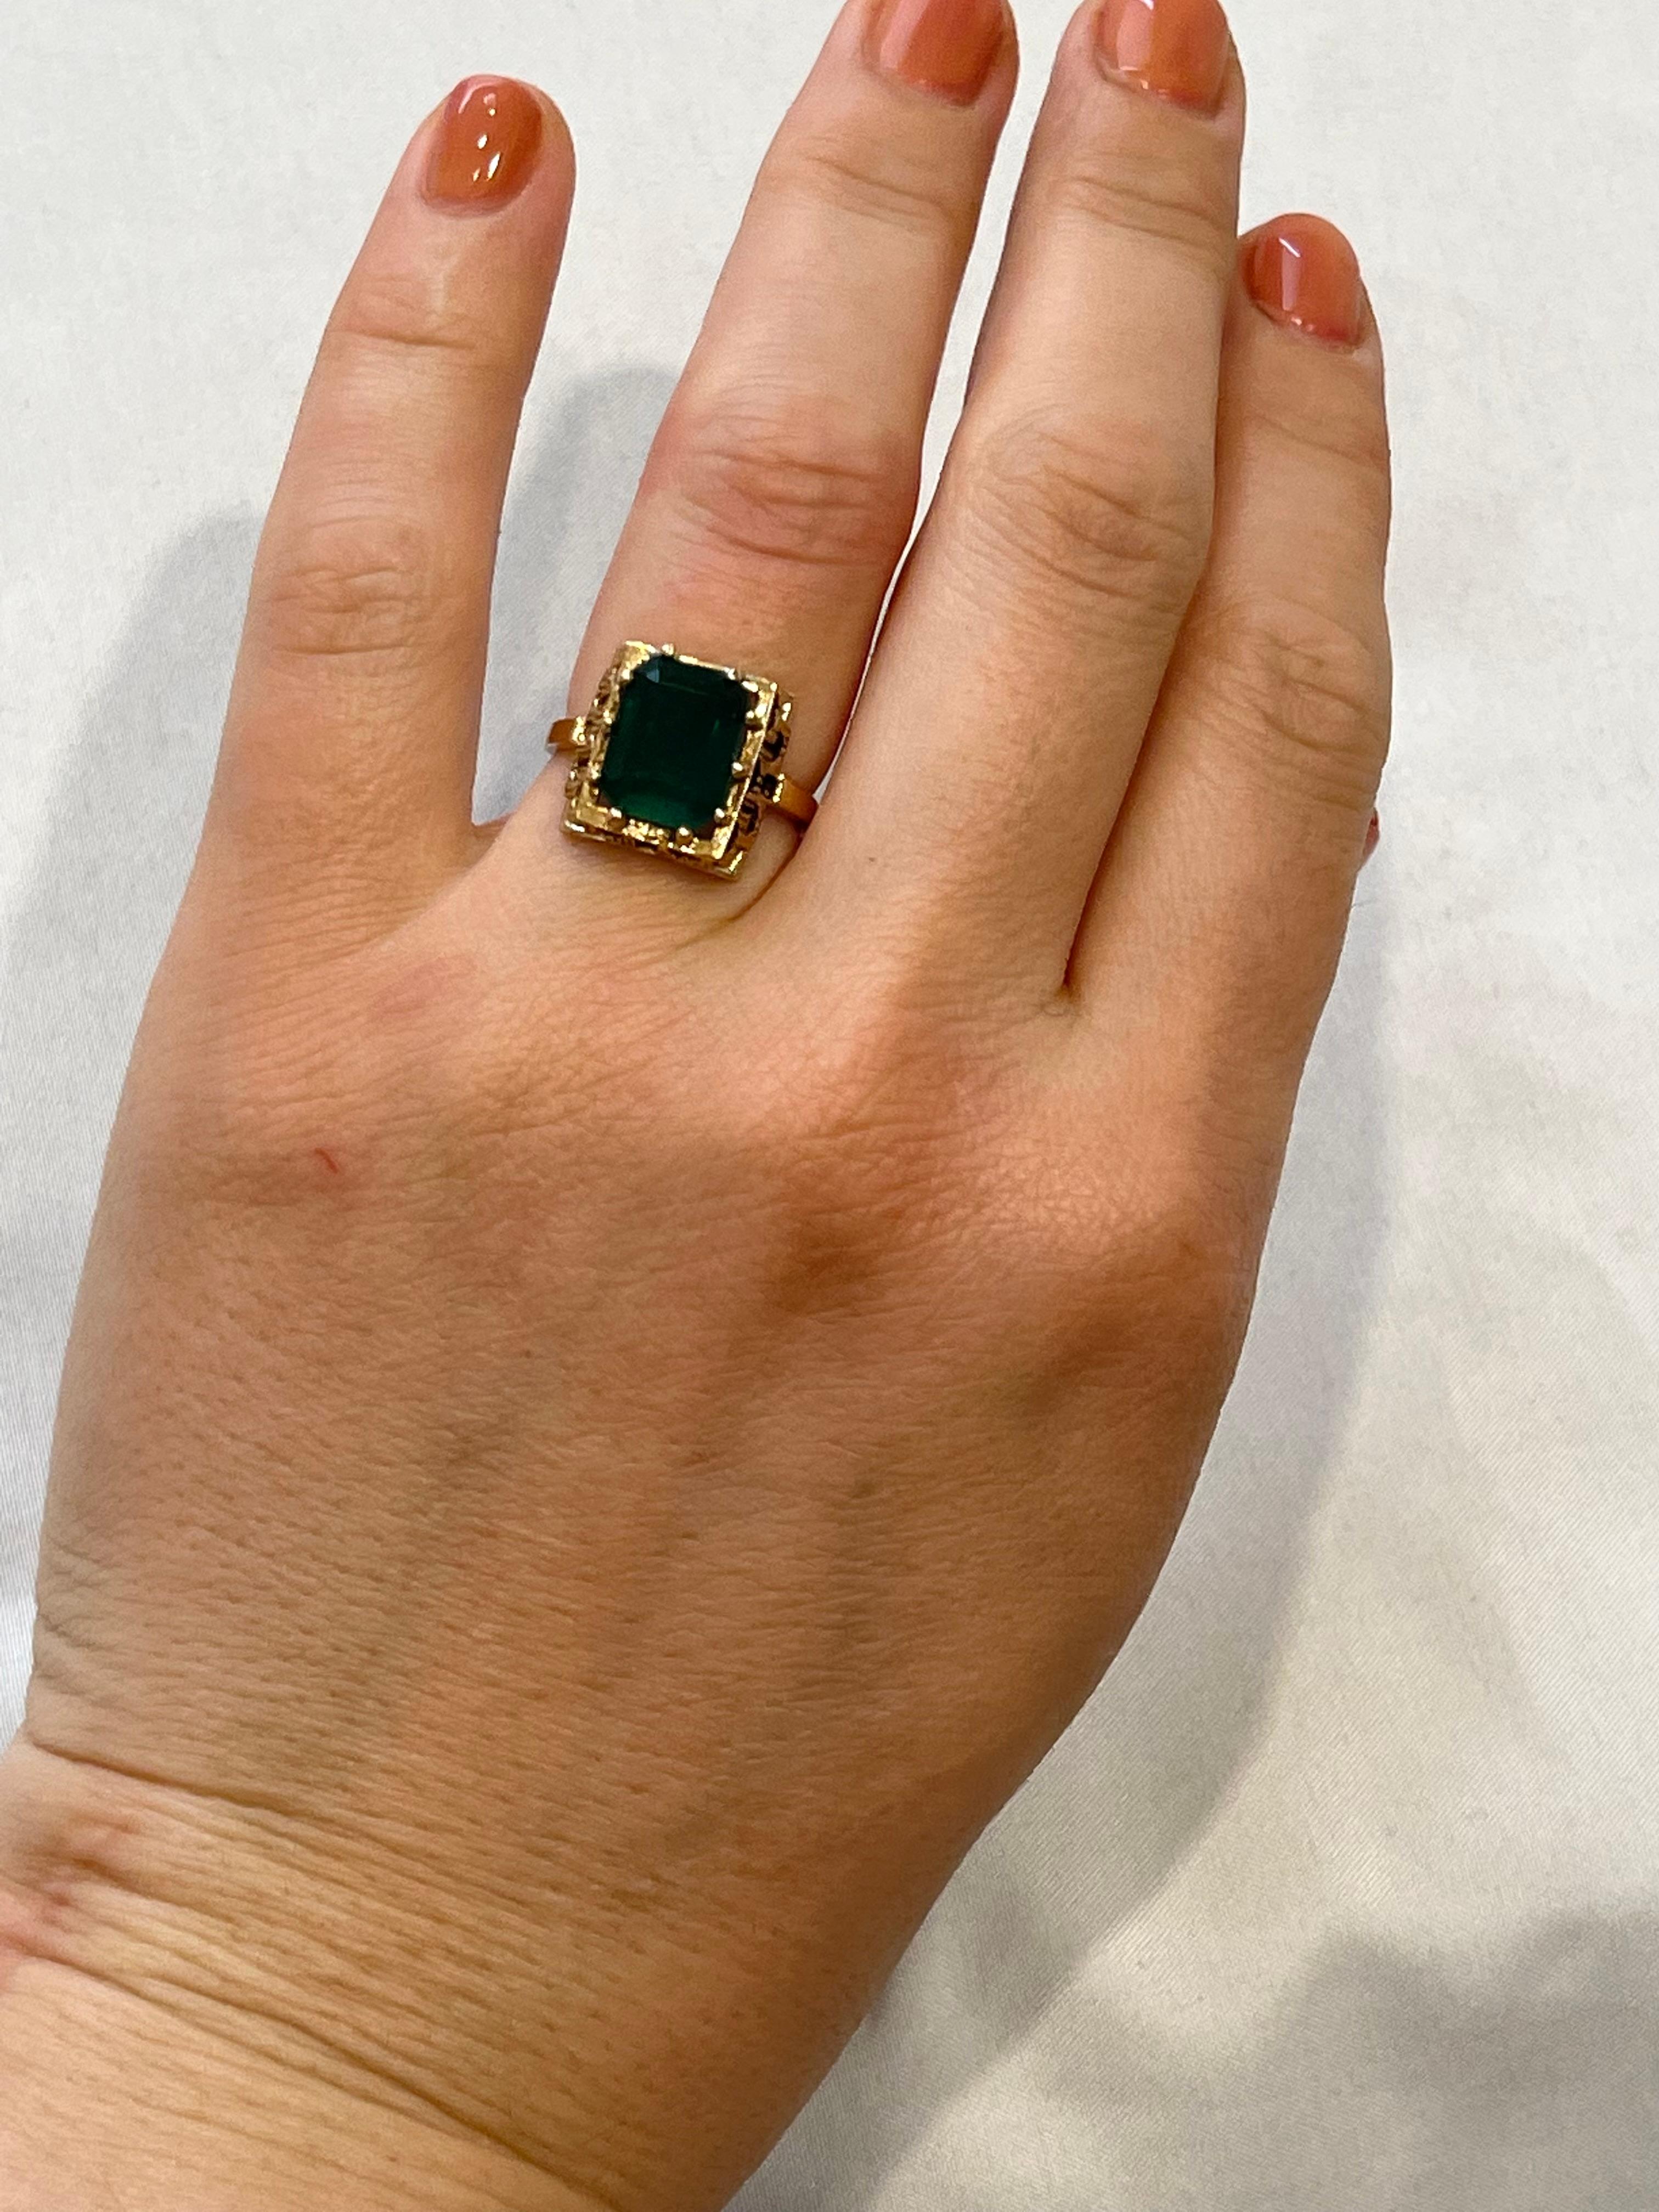 4.25 Carat Natural Emerald Cut Emerald Ring 14 Karat Yellow Gold For Sale 3